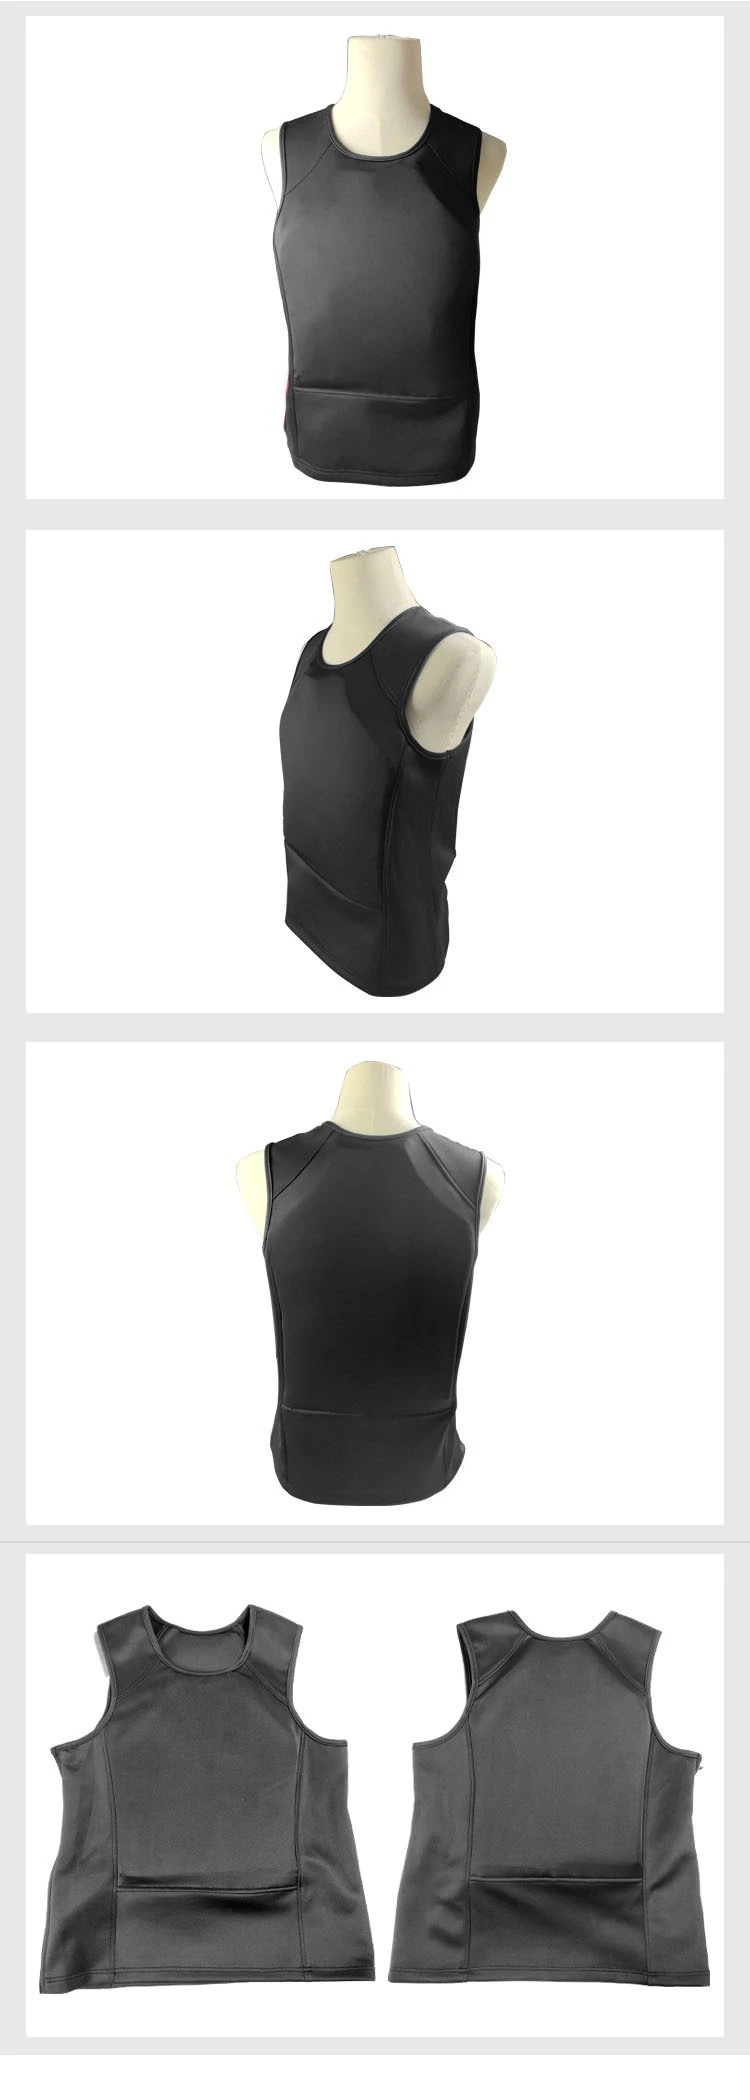 Nij Iiia Bulletproof Comfortable T-Shirt Ultra Thin Undershirt Covert Body Armor Bullet Proof Vest